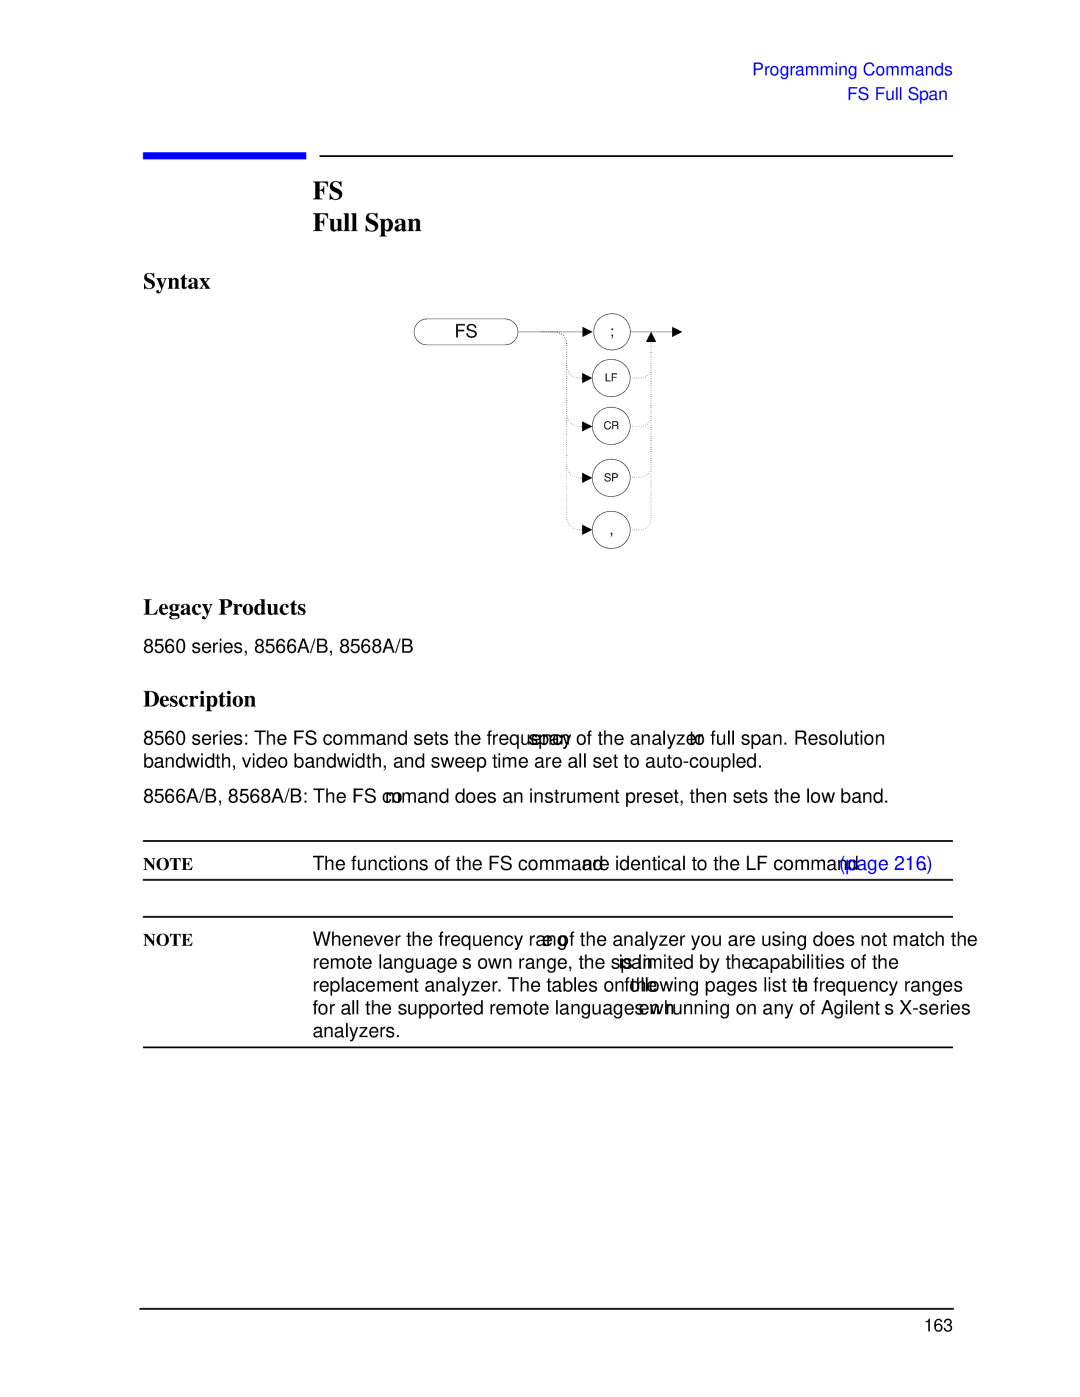 Agilent Technologies N9030a manual Full Span 